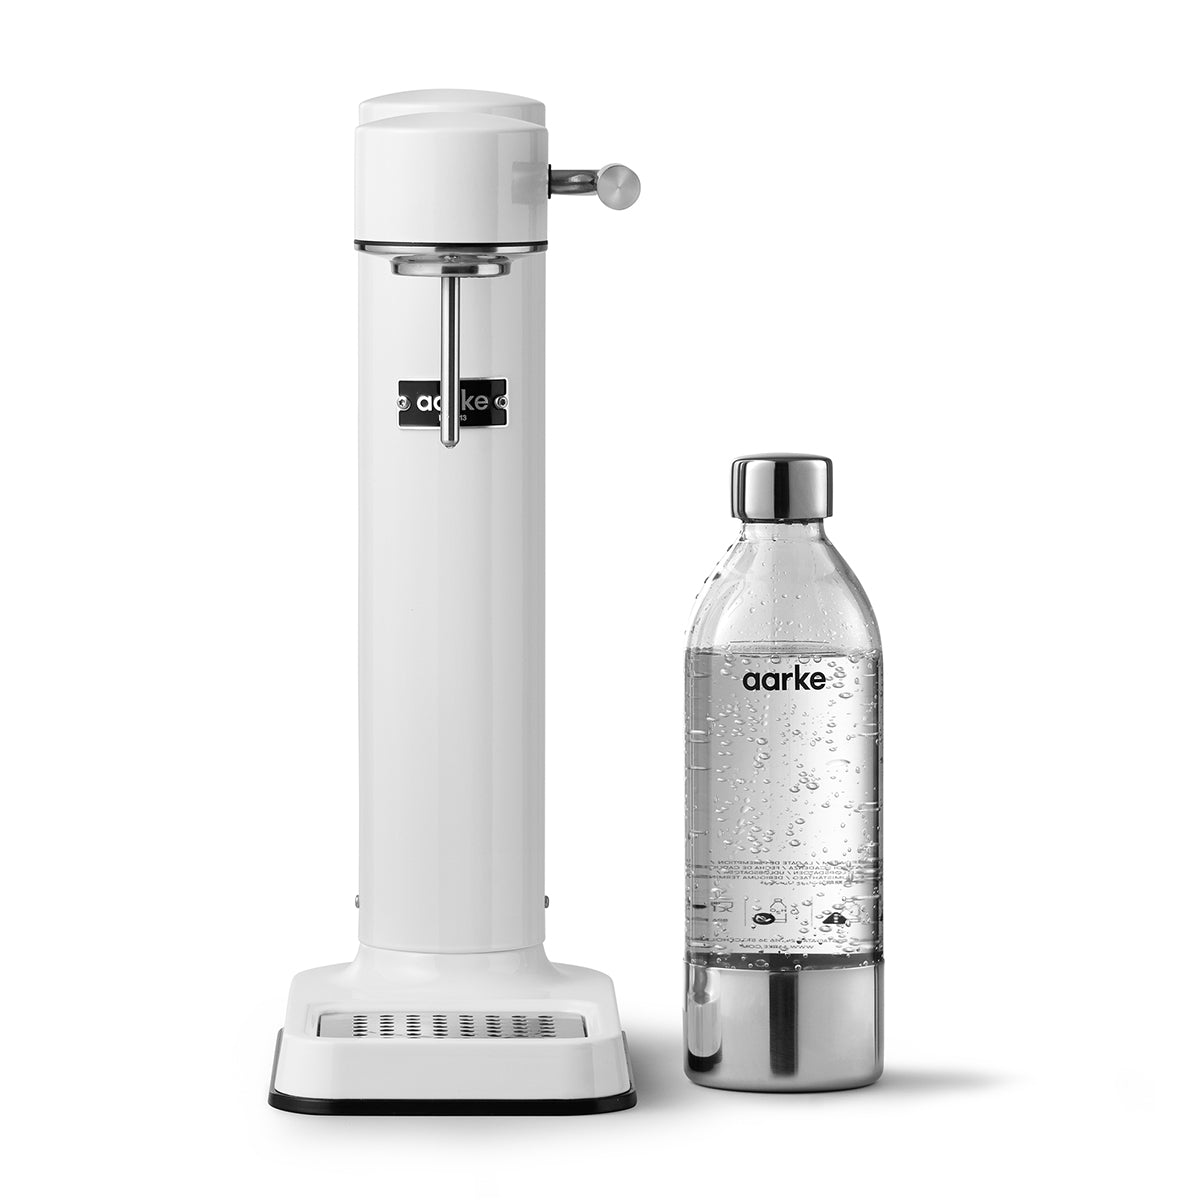 Aarke Carbonator 3 Sparkling Water Maker – White